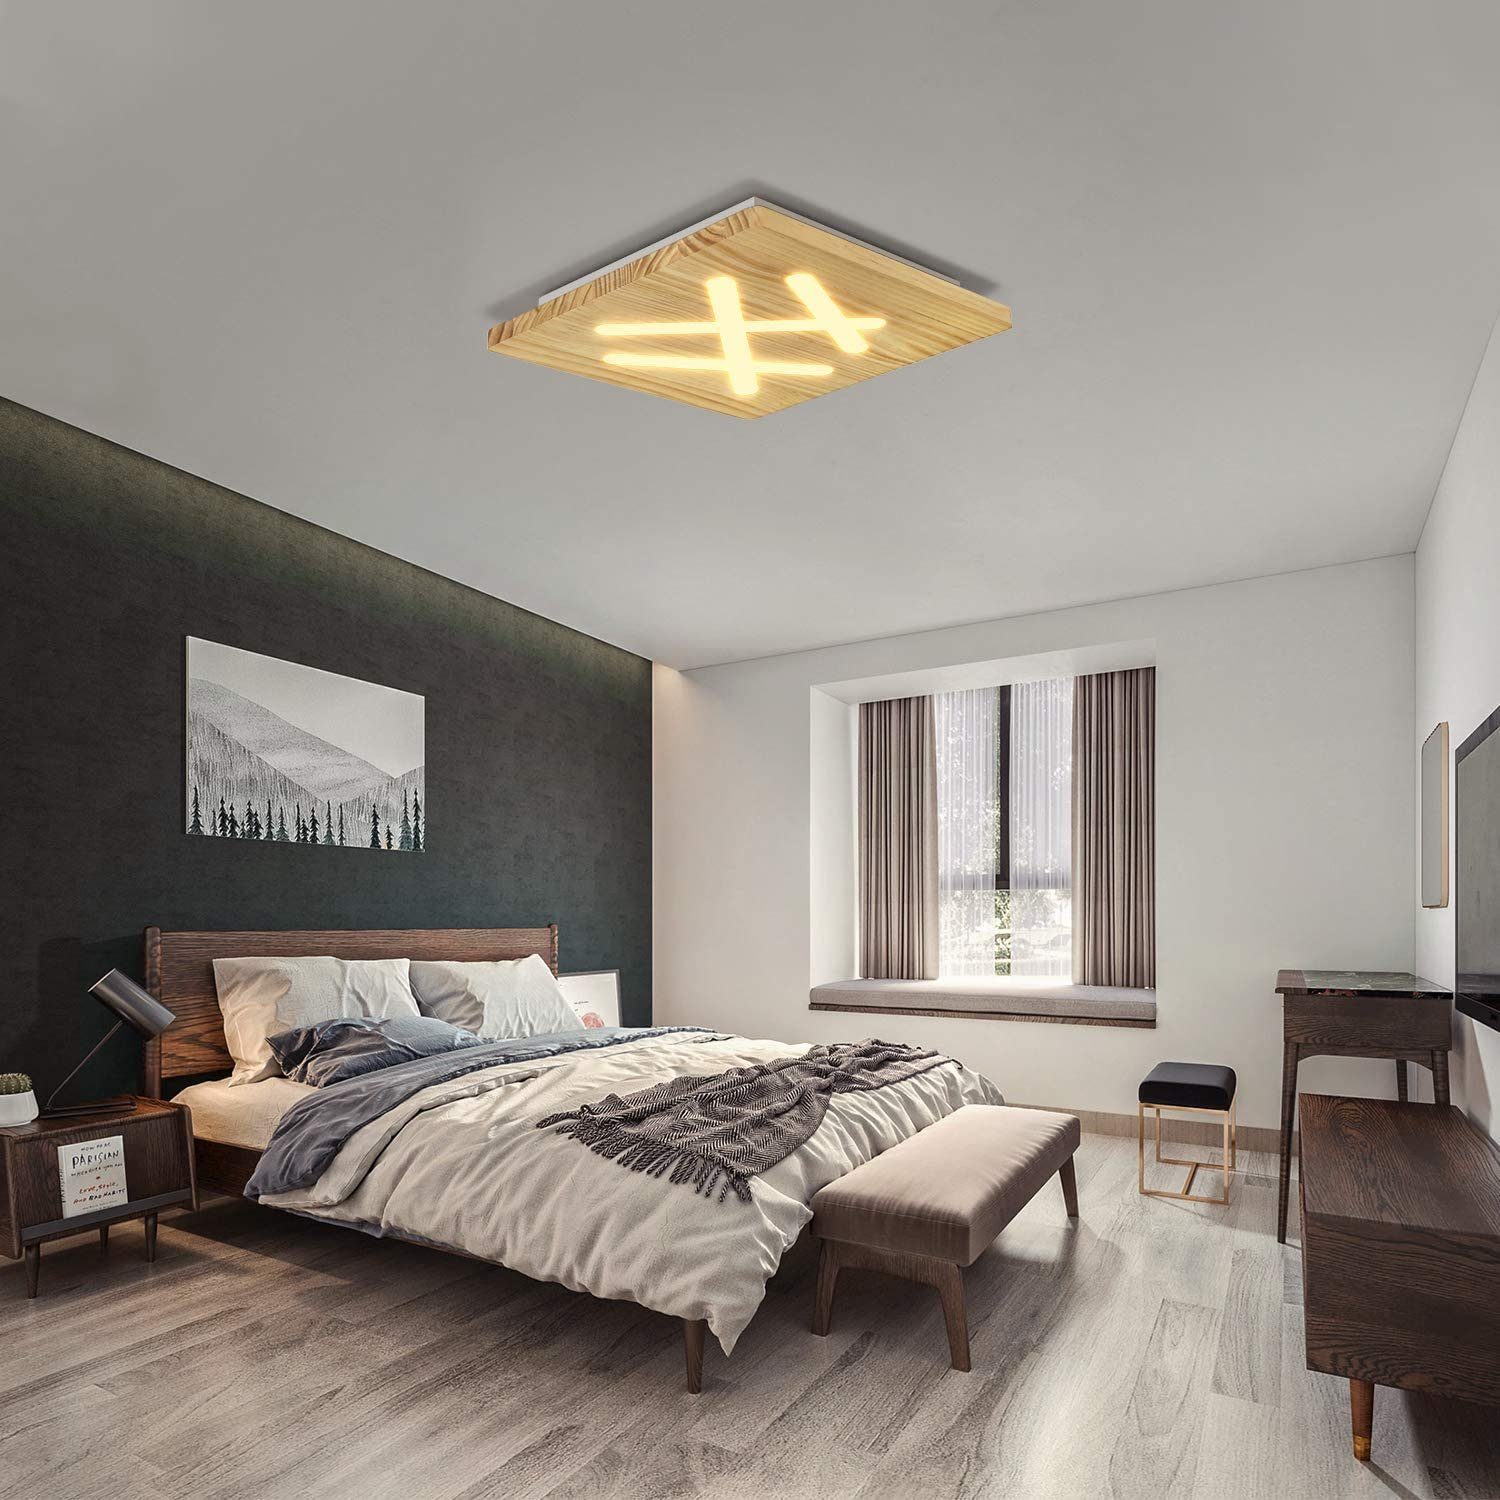 ZMH Holz fest integriert LED Flurlampe, Dimmer, Wohnzimmer 40cm Acryl LED Quadratisch Deckenleuchte